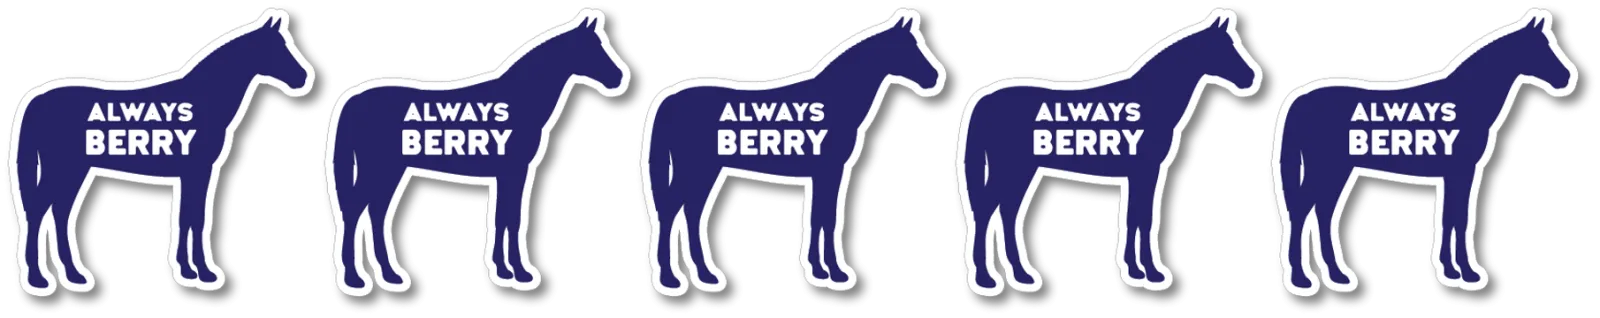 Always Berry Horse Magnet